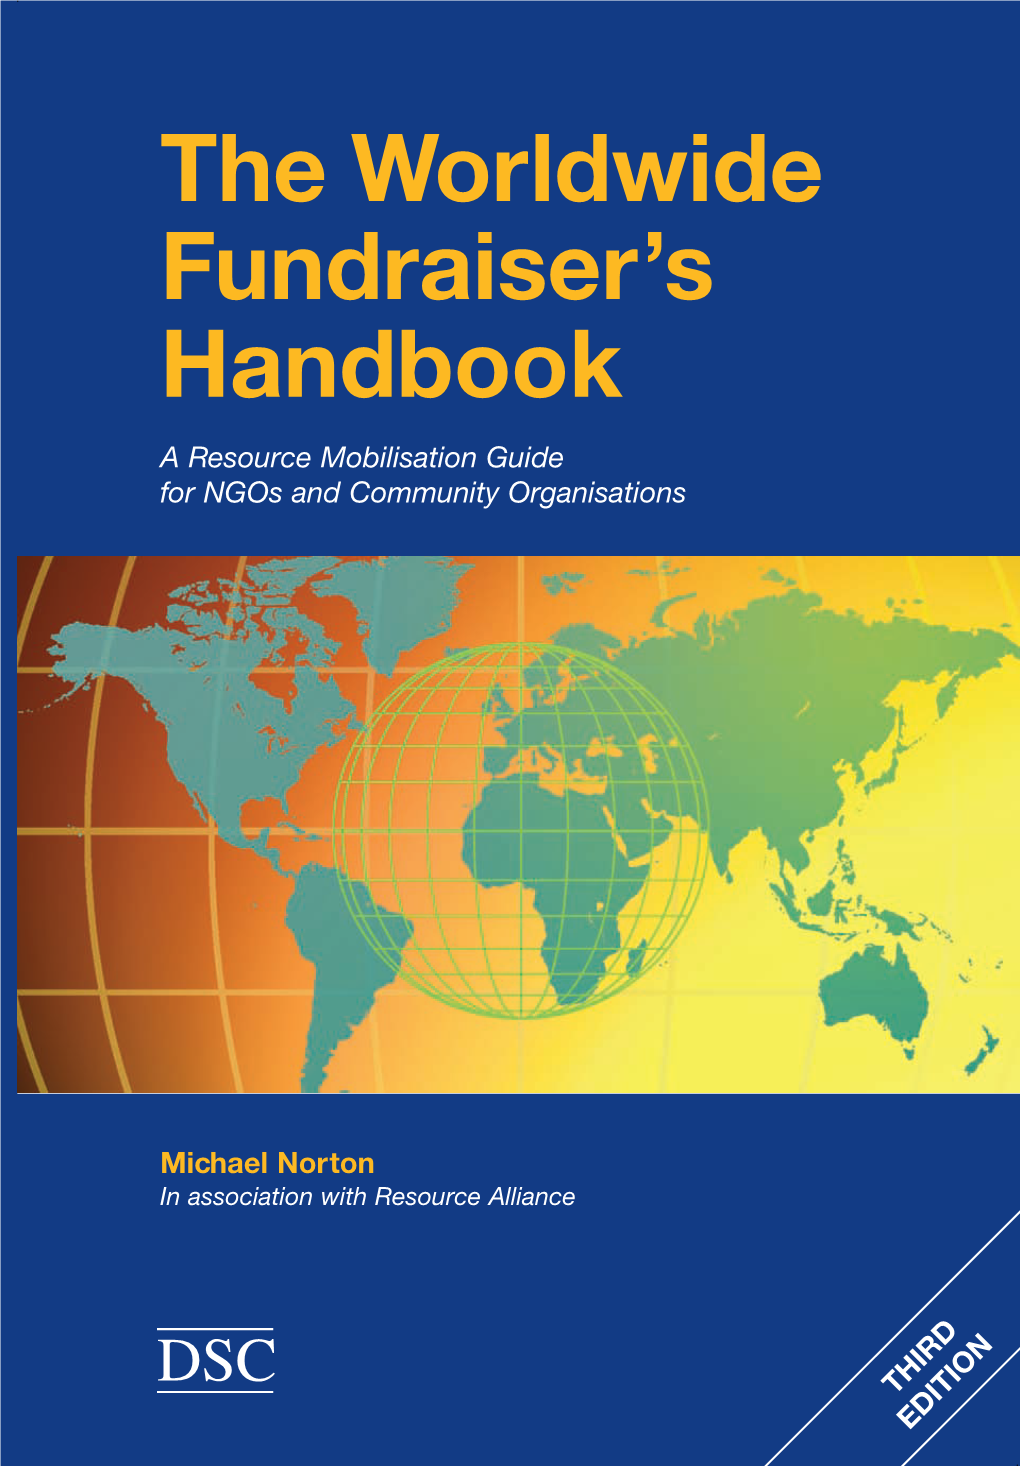 The Worldwide Fundraiser's Handbook